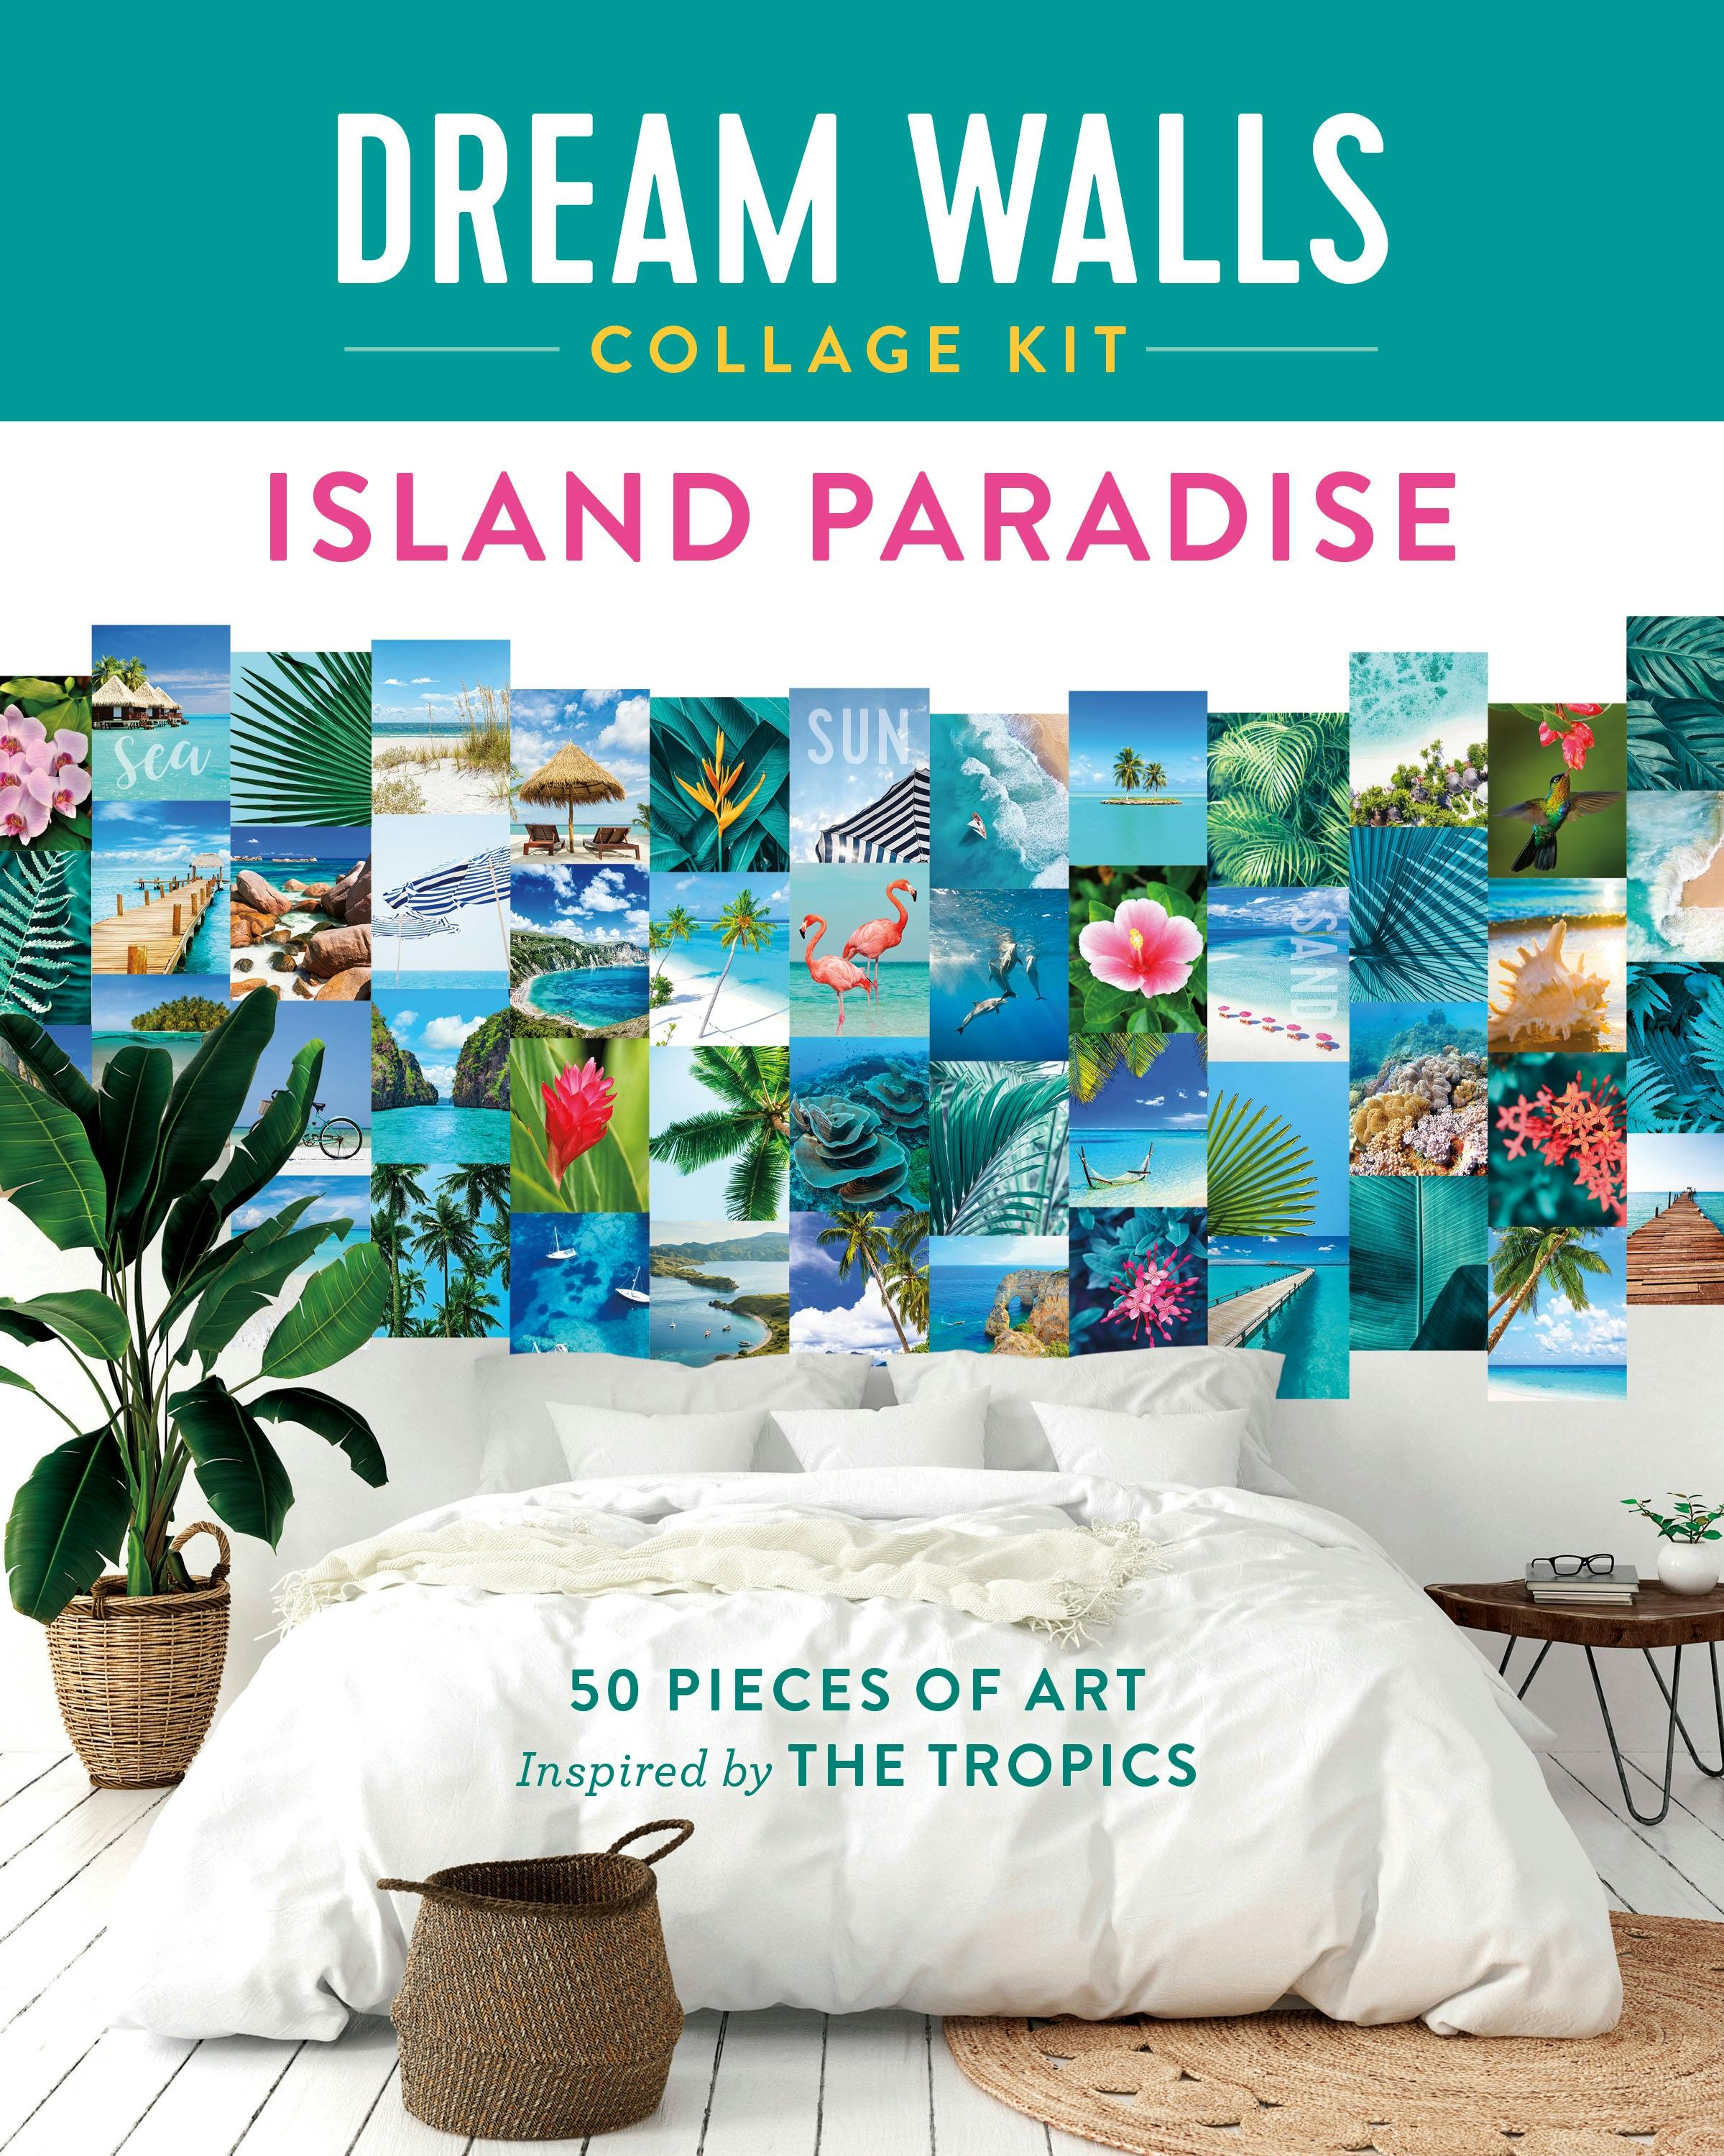 Dream Walls Collage Kit: Island Paradise